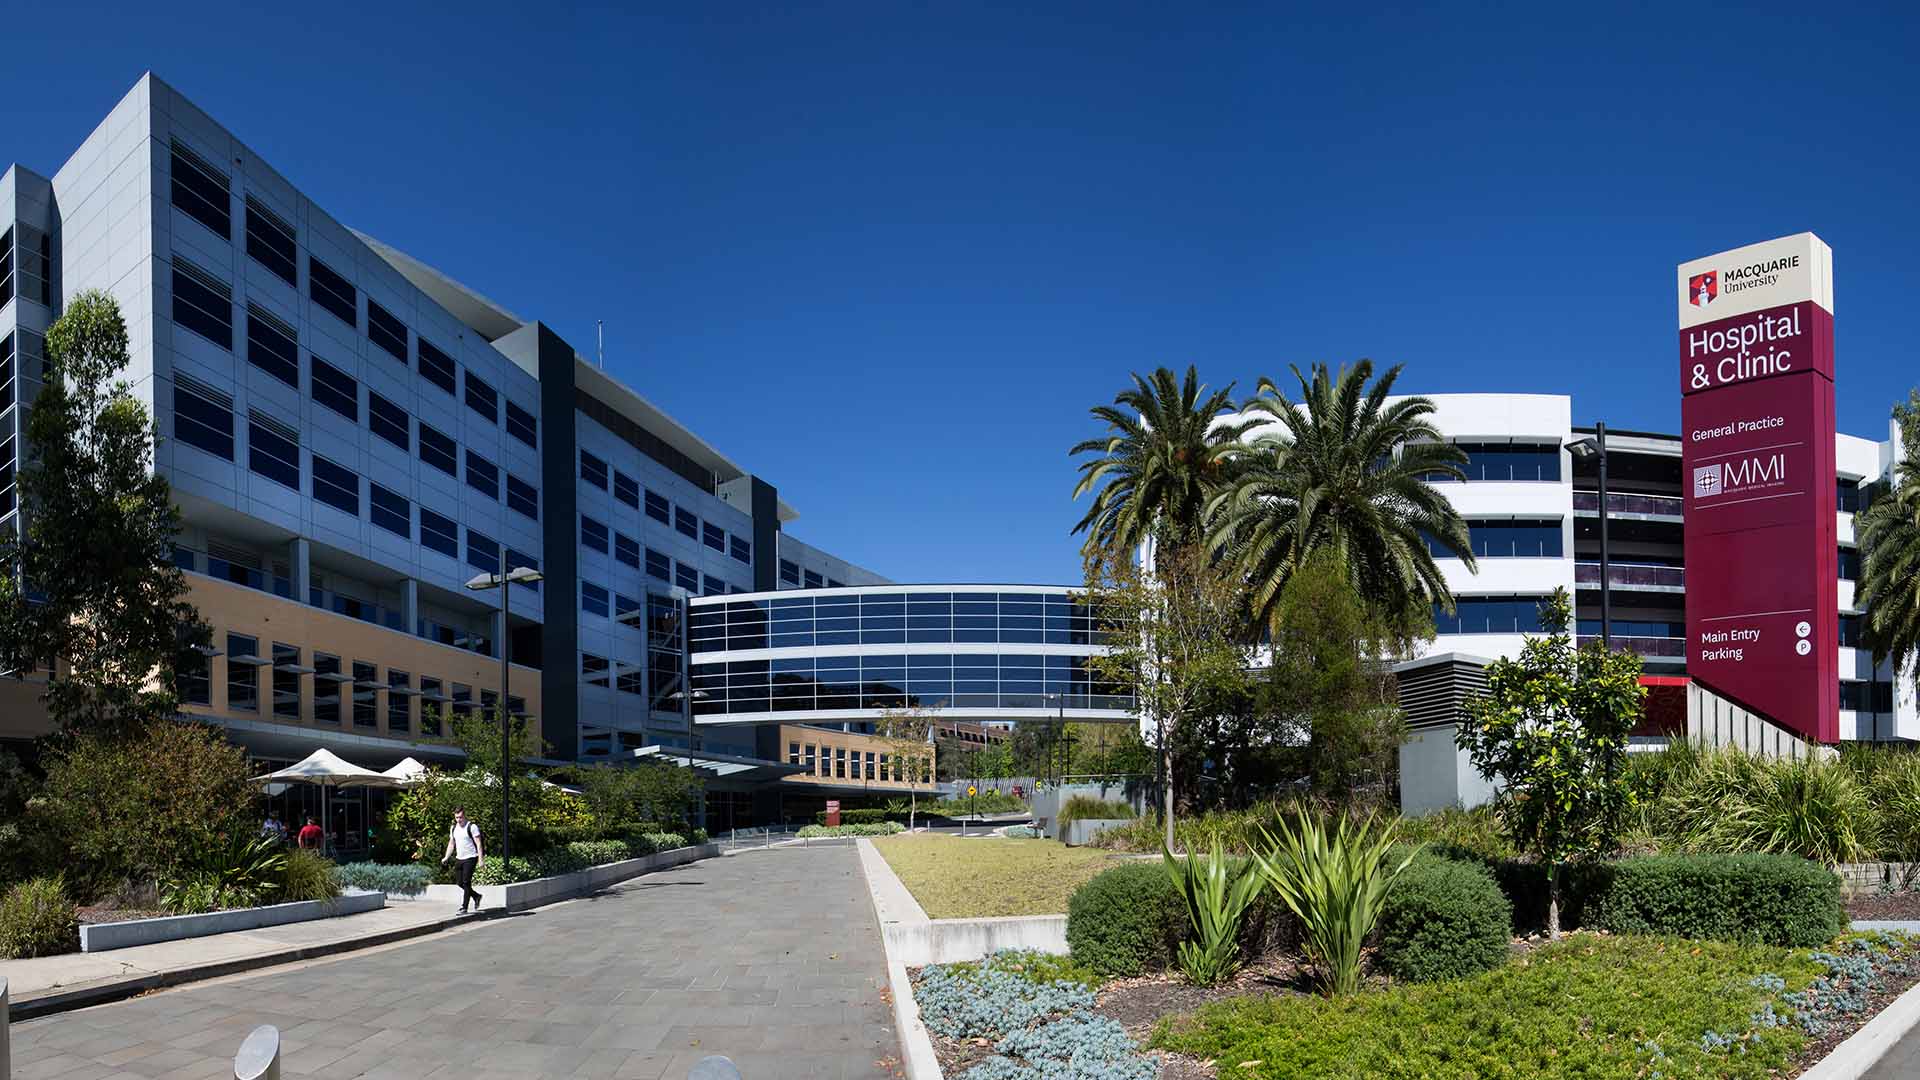 Macquarie University Hospital and Clinic.